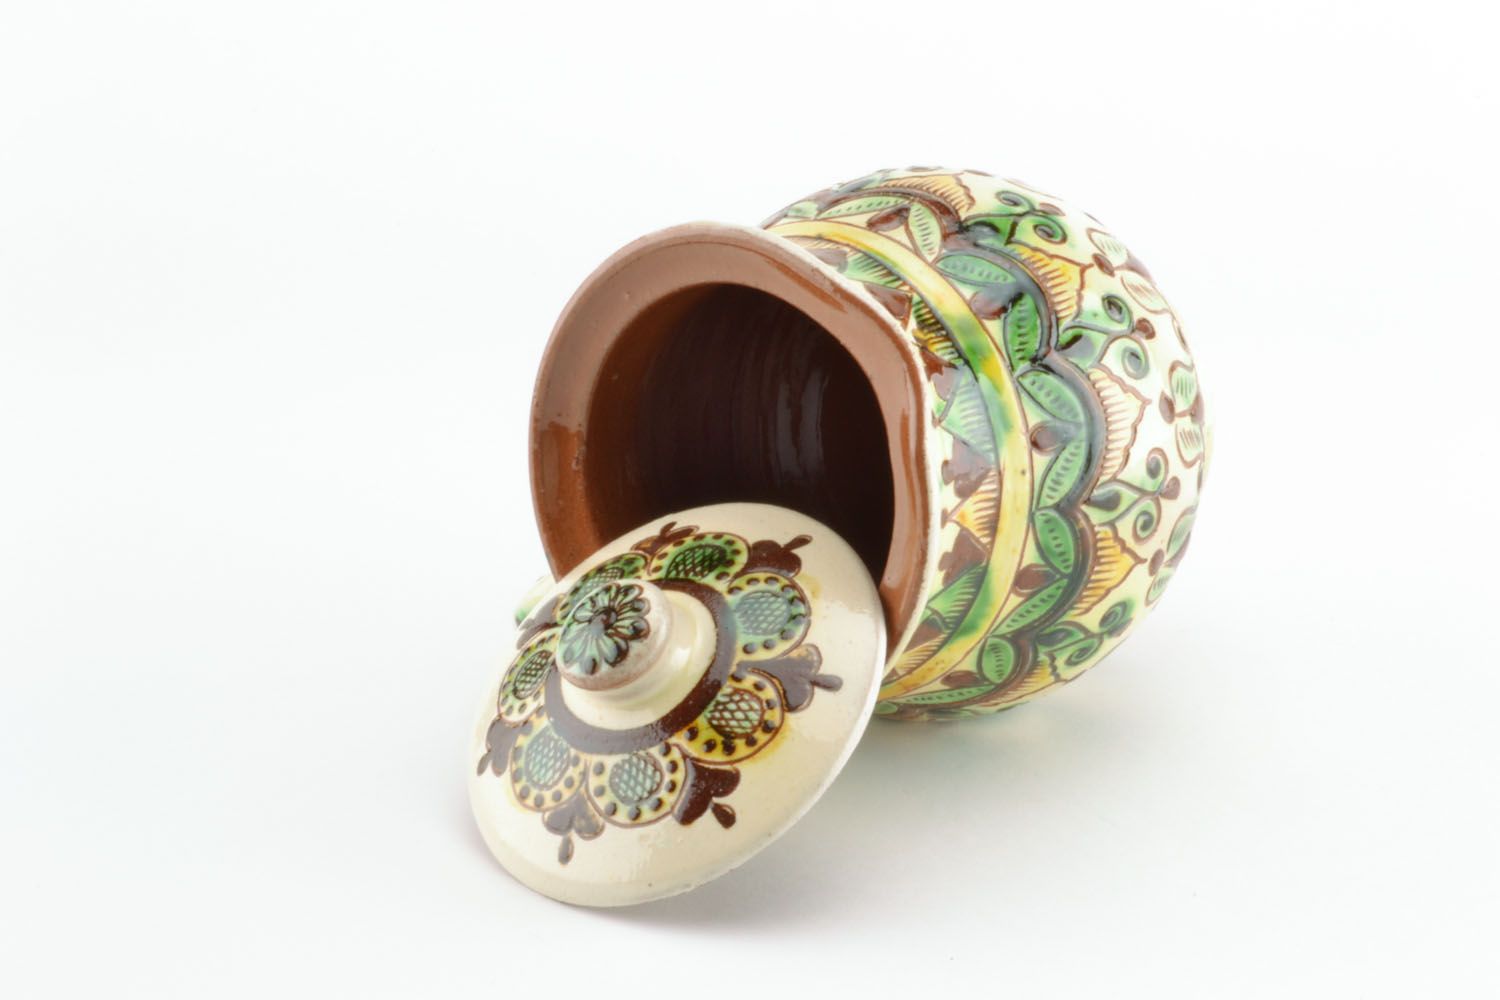 15 oz ceramic handmade creamer pitcher in ethnic design 1 lb photo 2